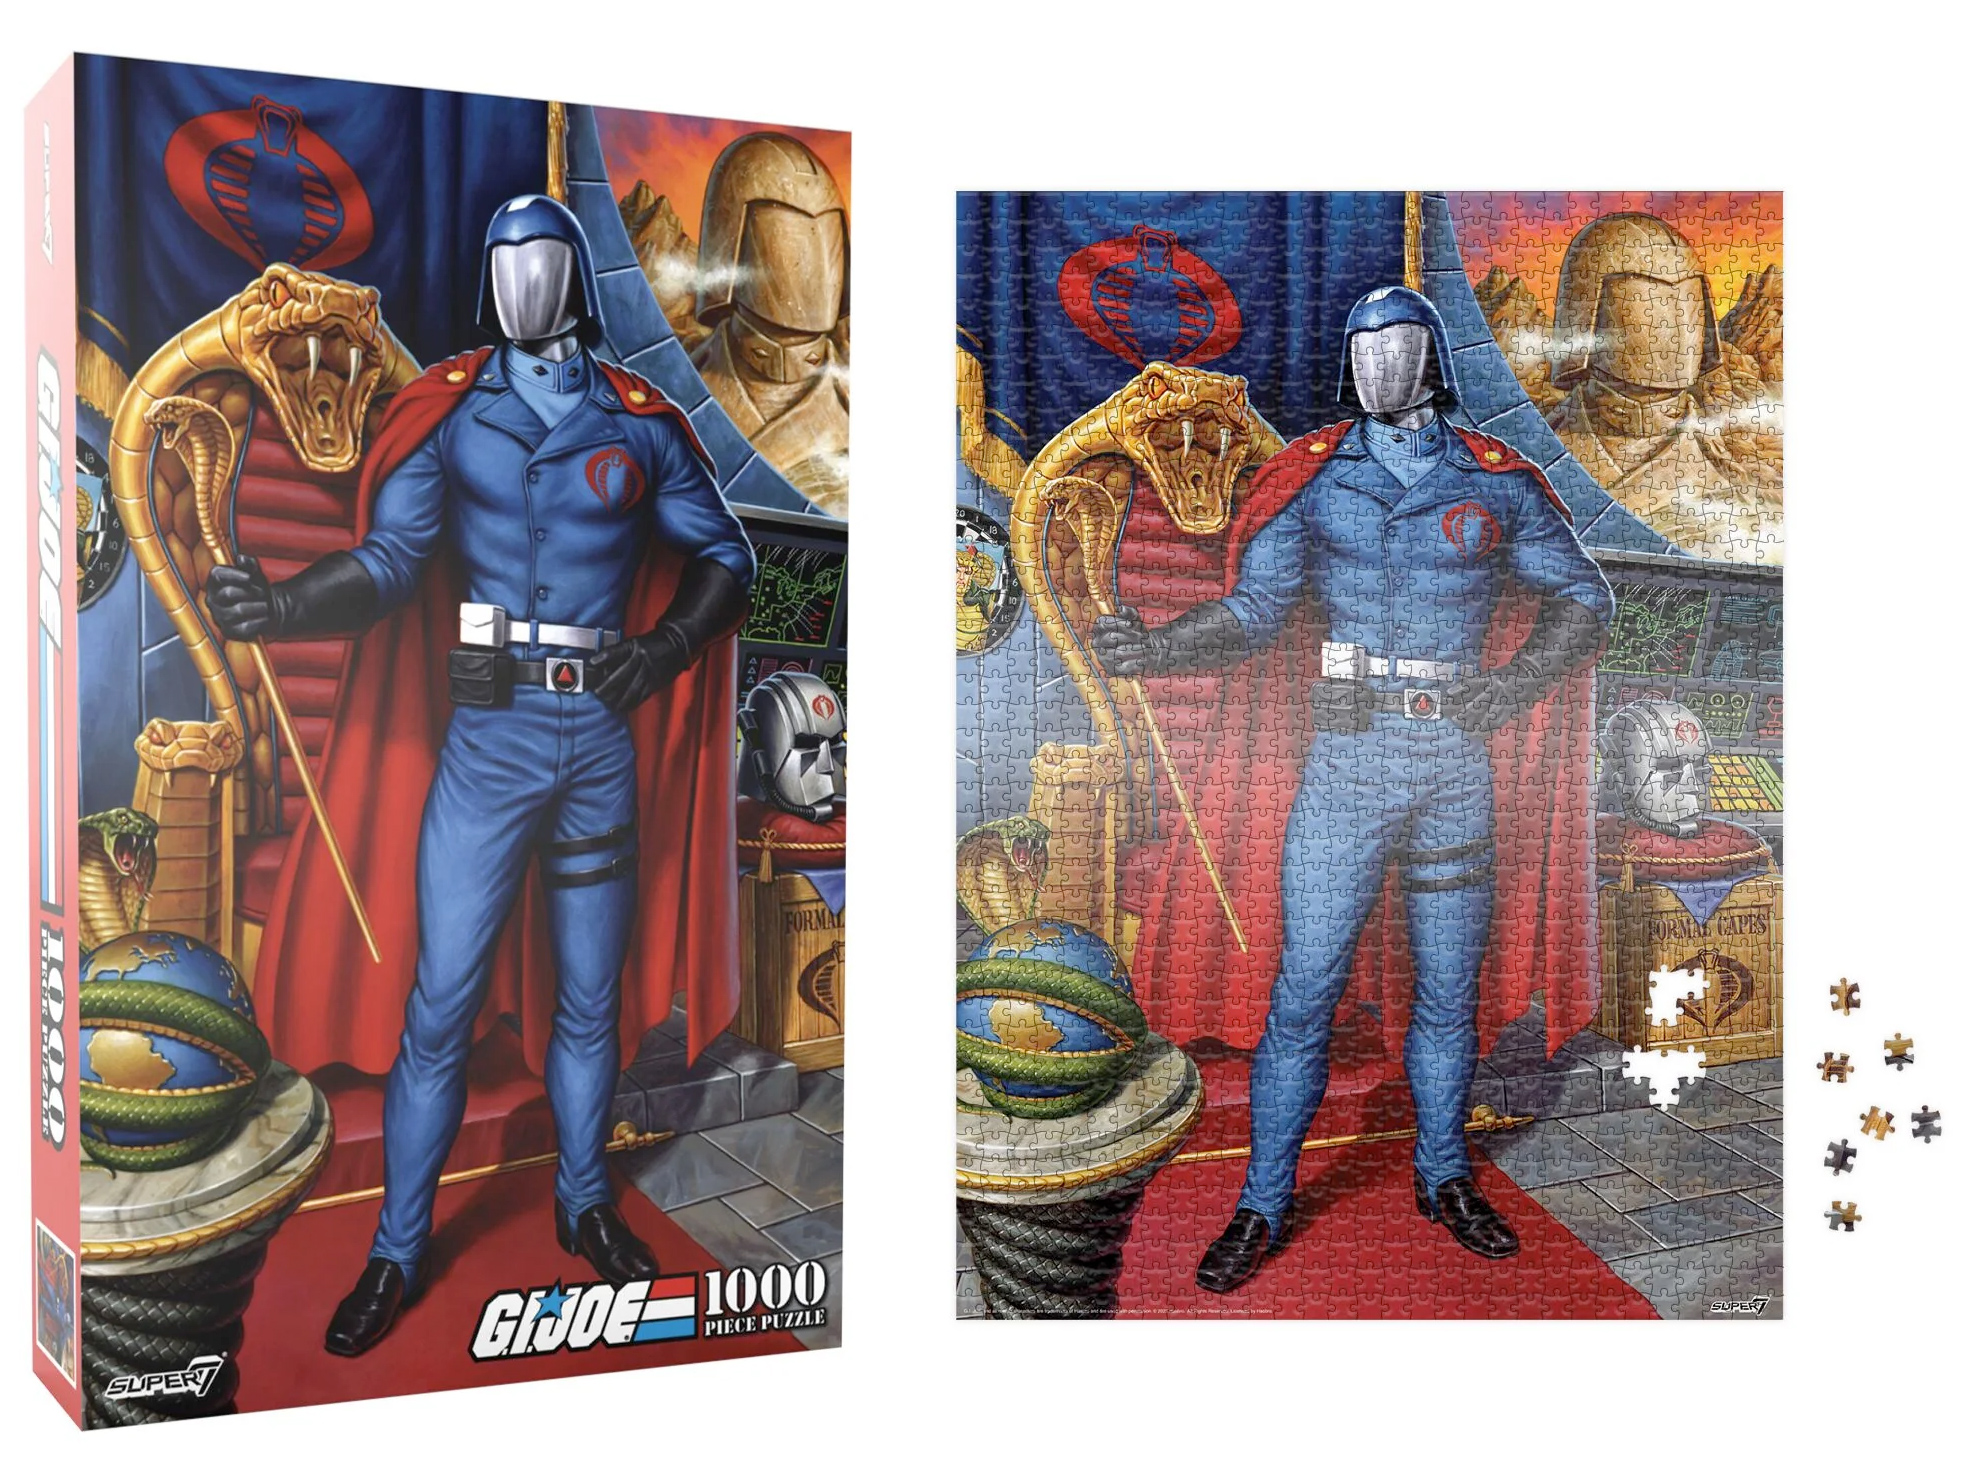 GI Joe Cobra Commander Puzzle with 1,000 pieces